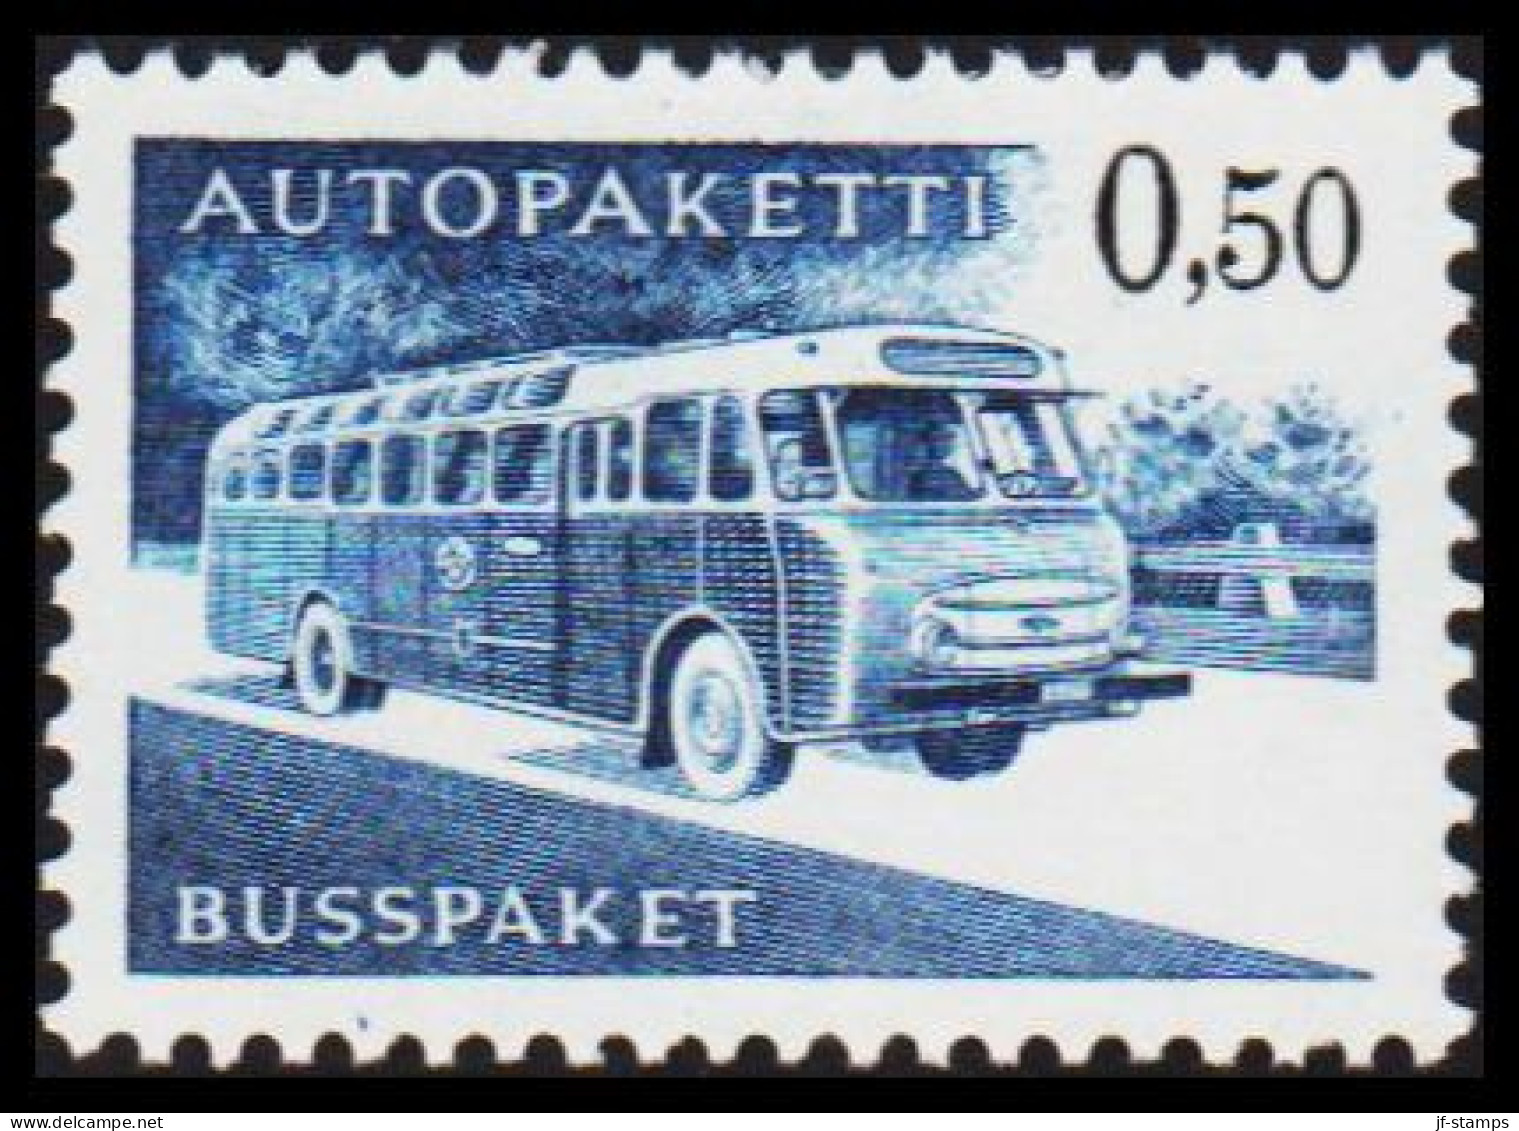 1963-1980. FINLAND. Mail Bus. 0,50 Mk. AUTOPAKETTI - BUSSPAKET Never Hinged. Normal Paper.... (Michel AP 12x) - JF535631 - Postbuspakete